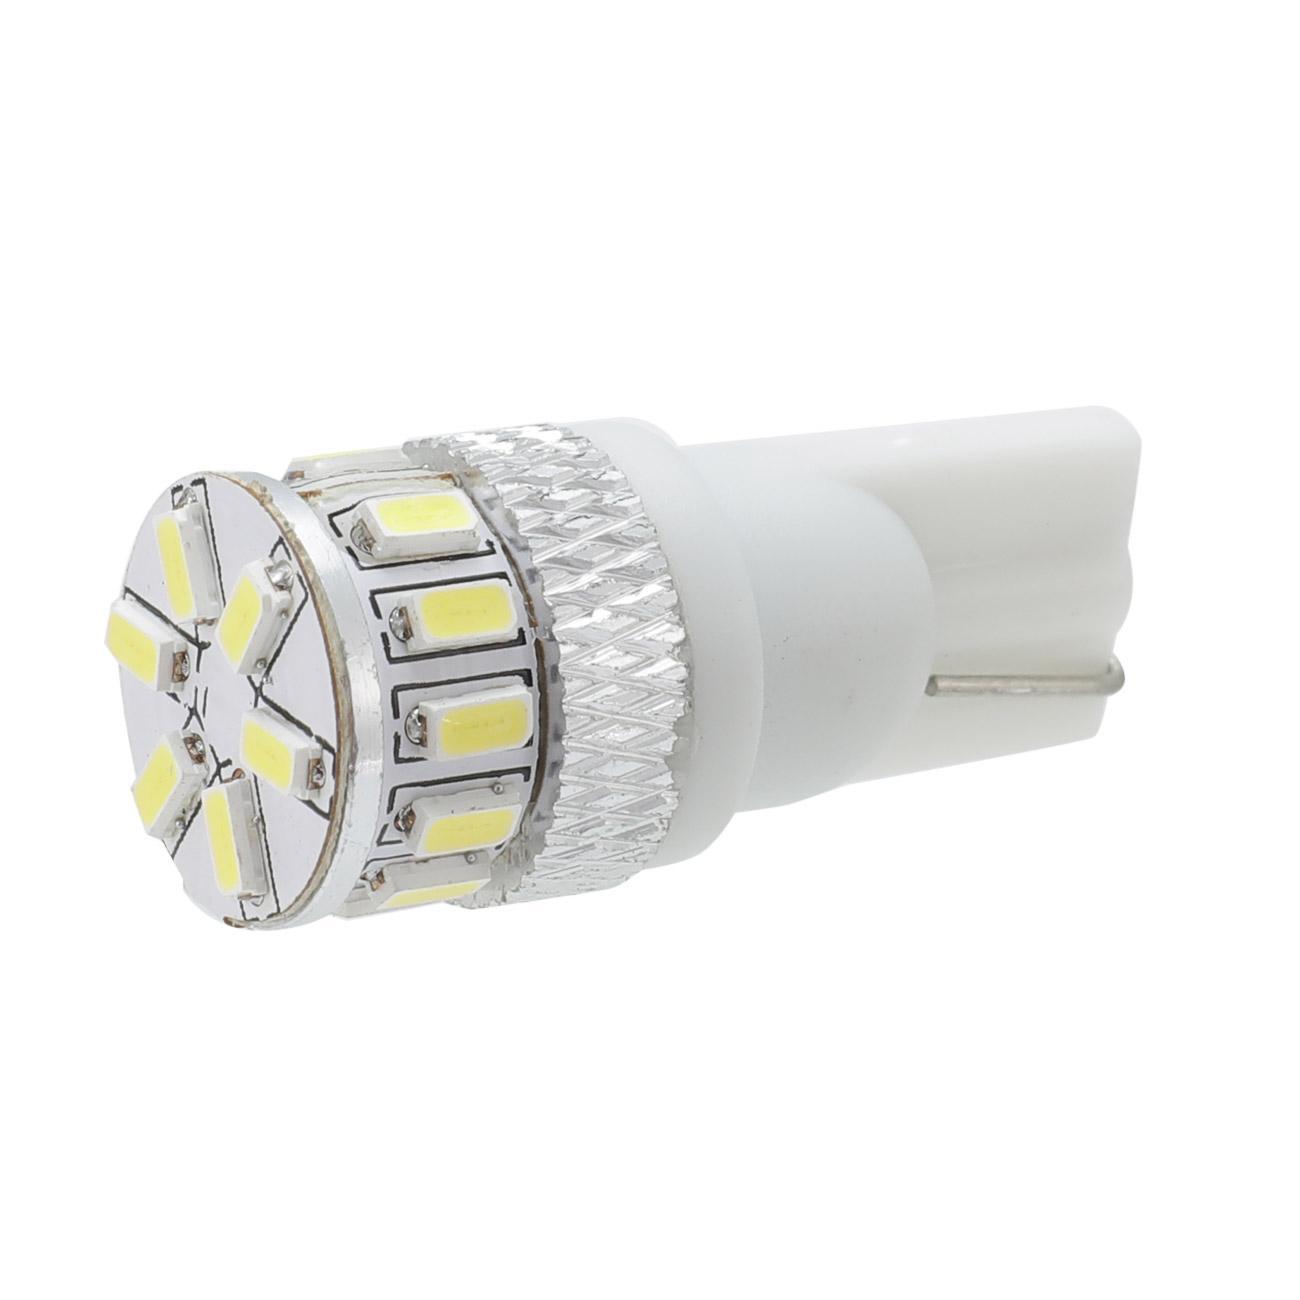 T10 168 194 912 921 2825 W5W LED Bulbs(PAIR) – Universal – 20SMD